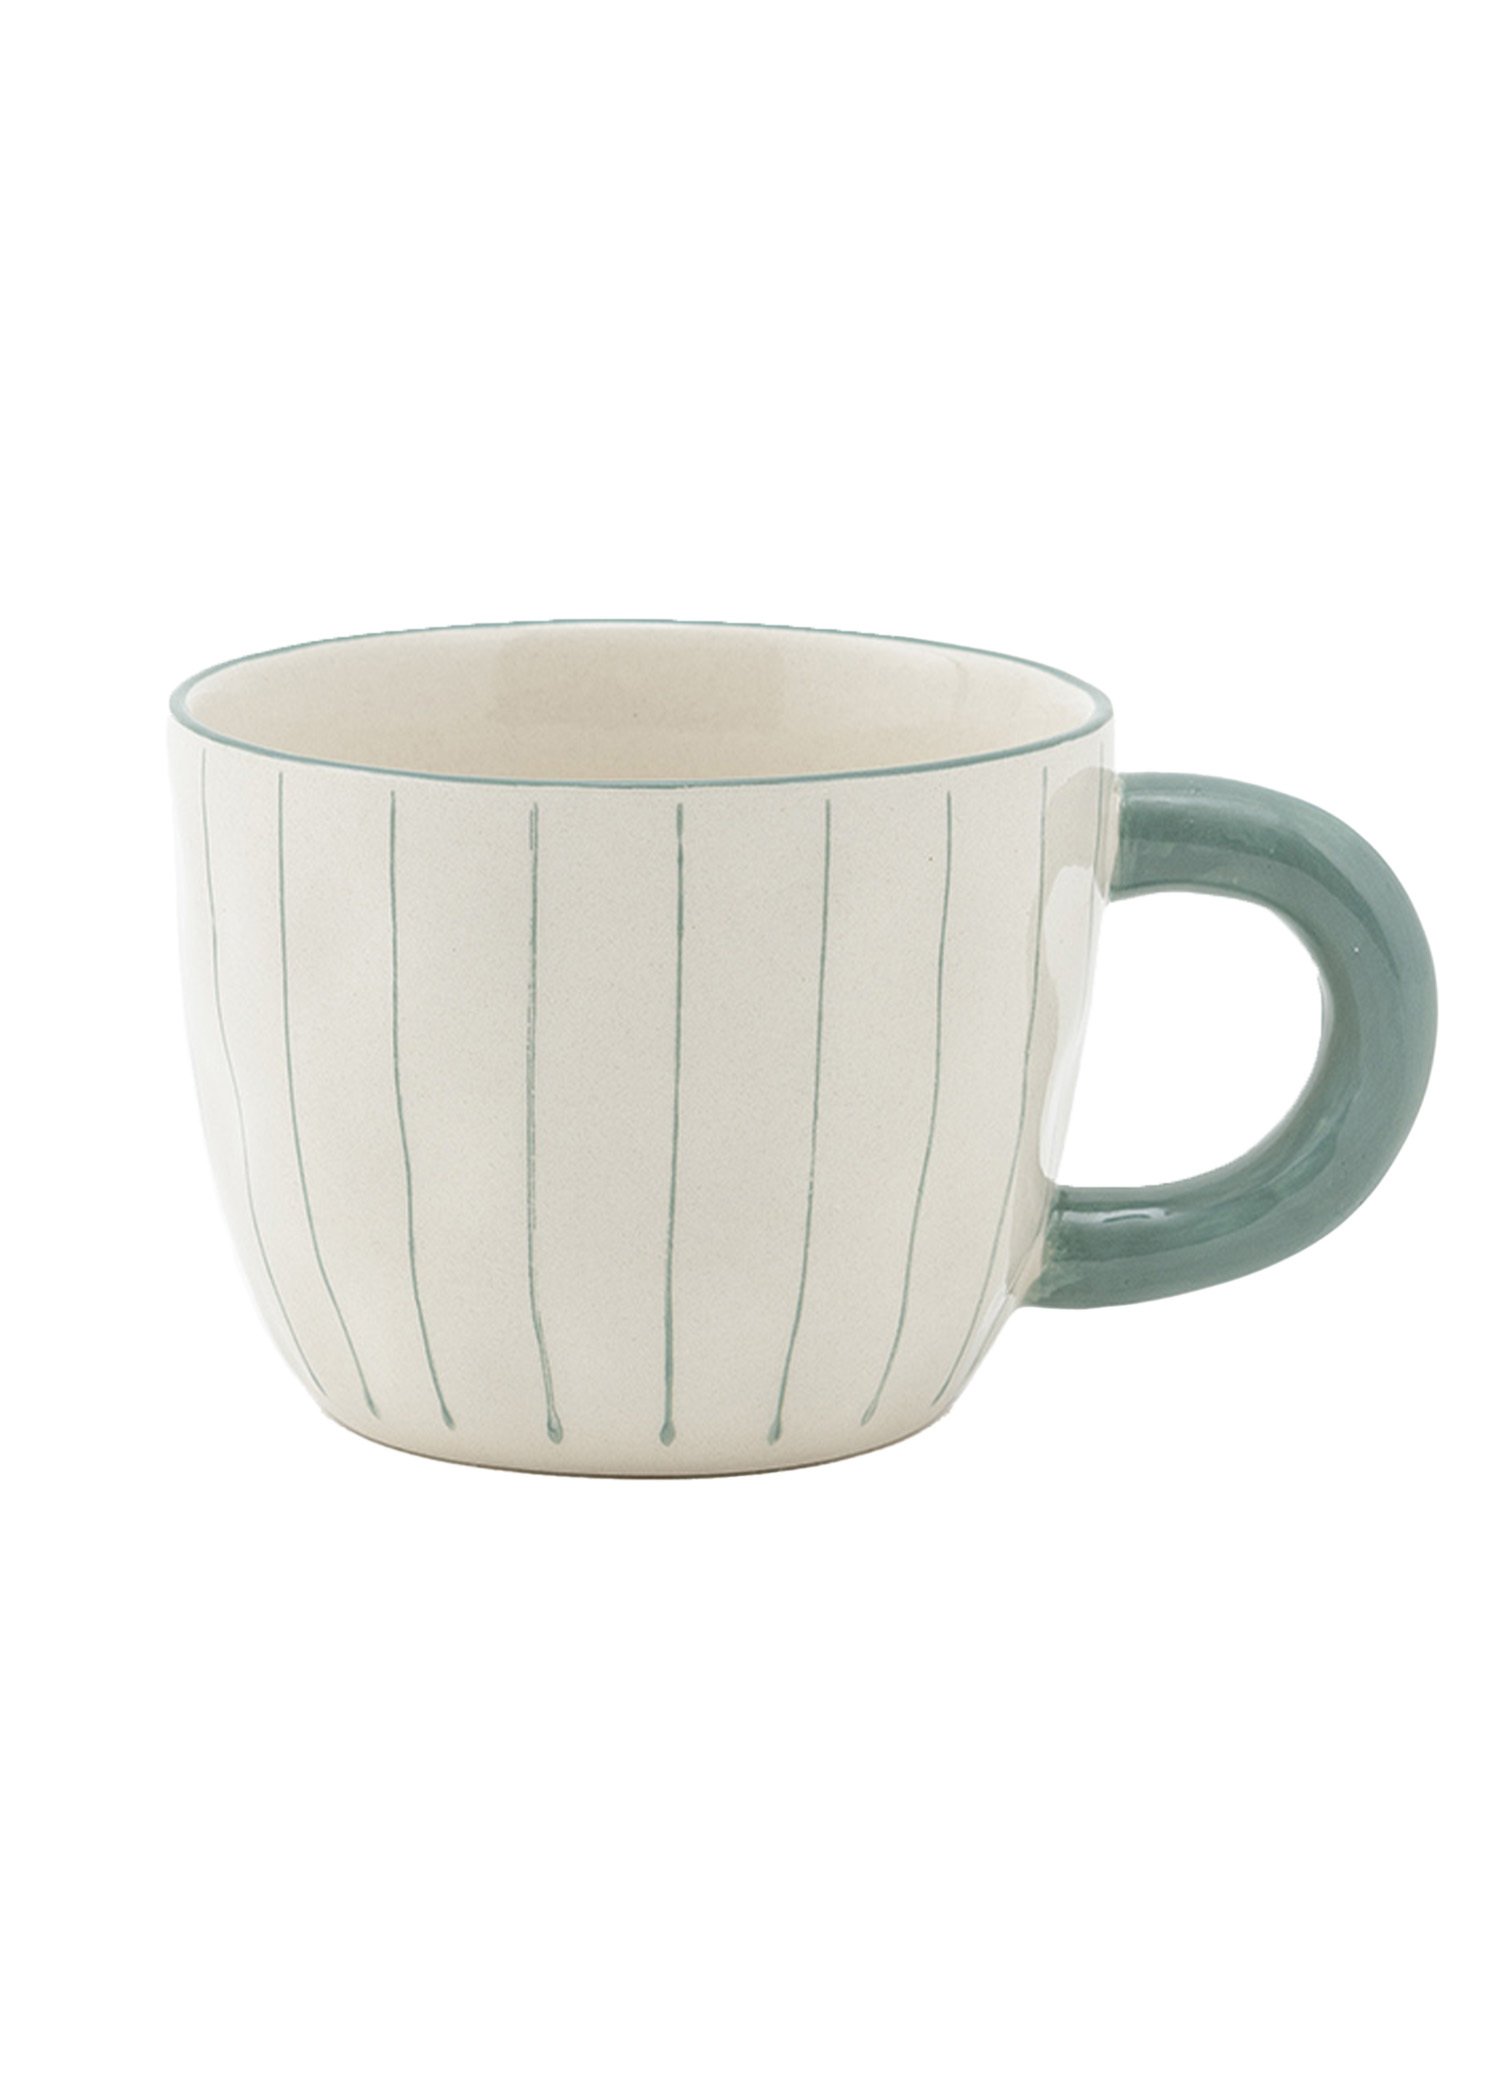 Hand-painted stoneware mug